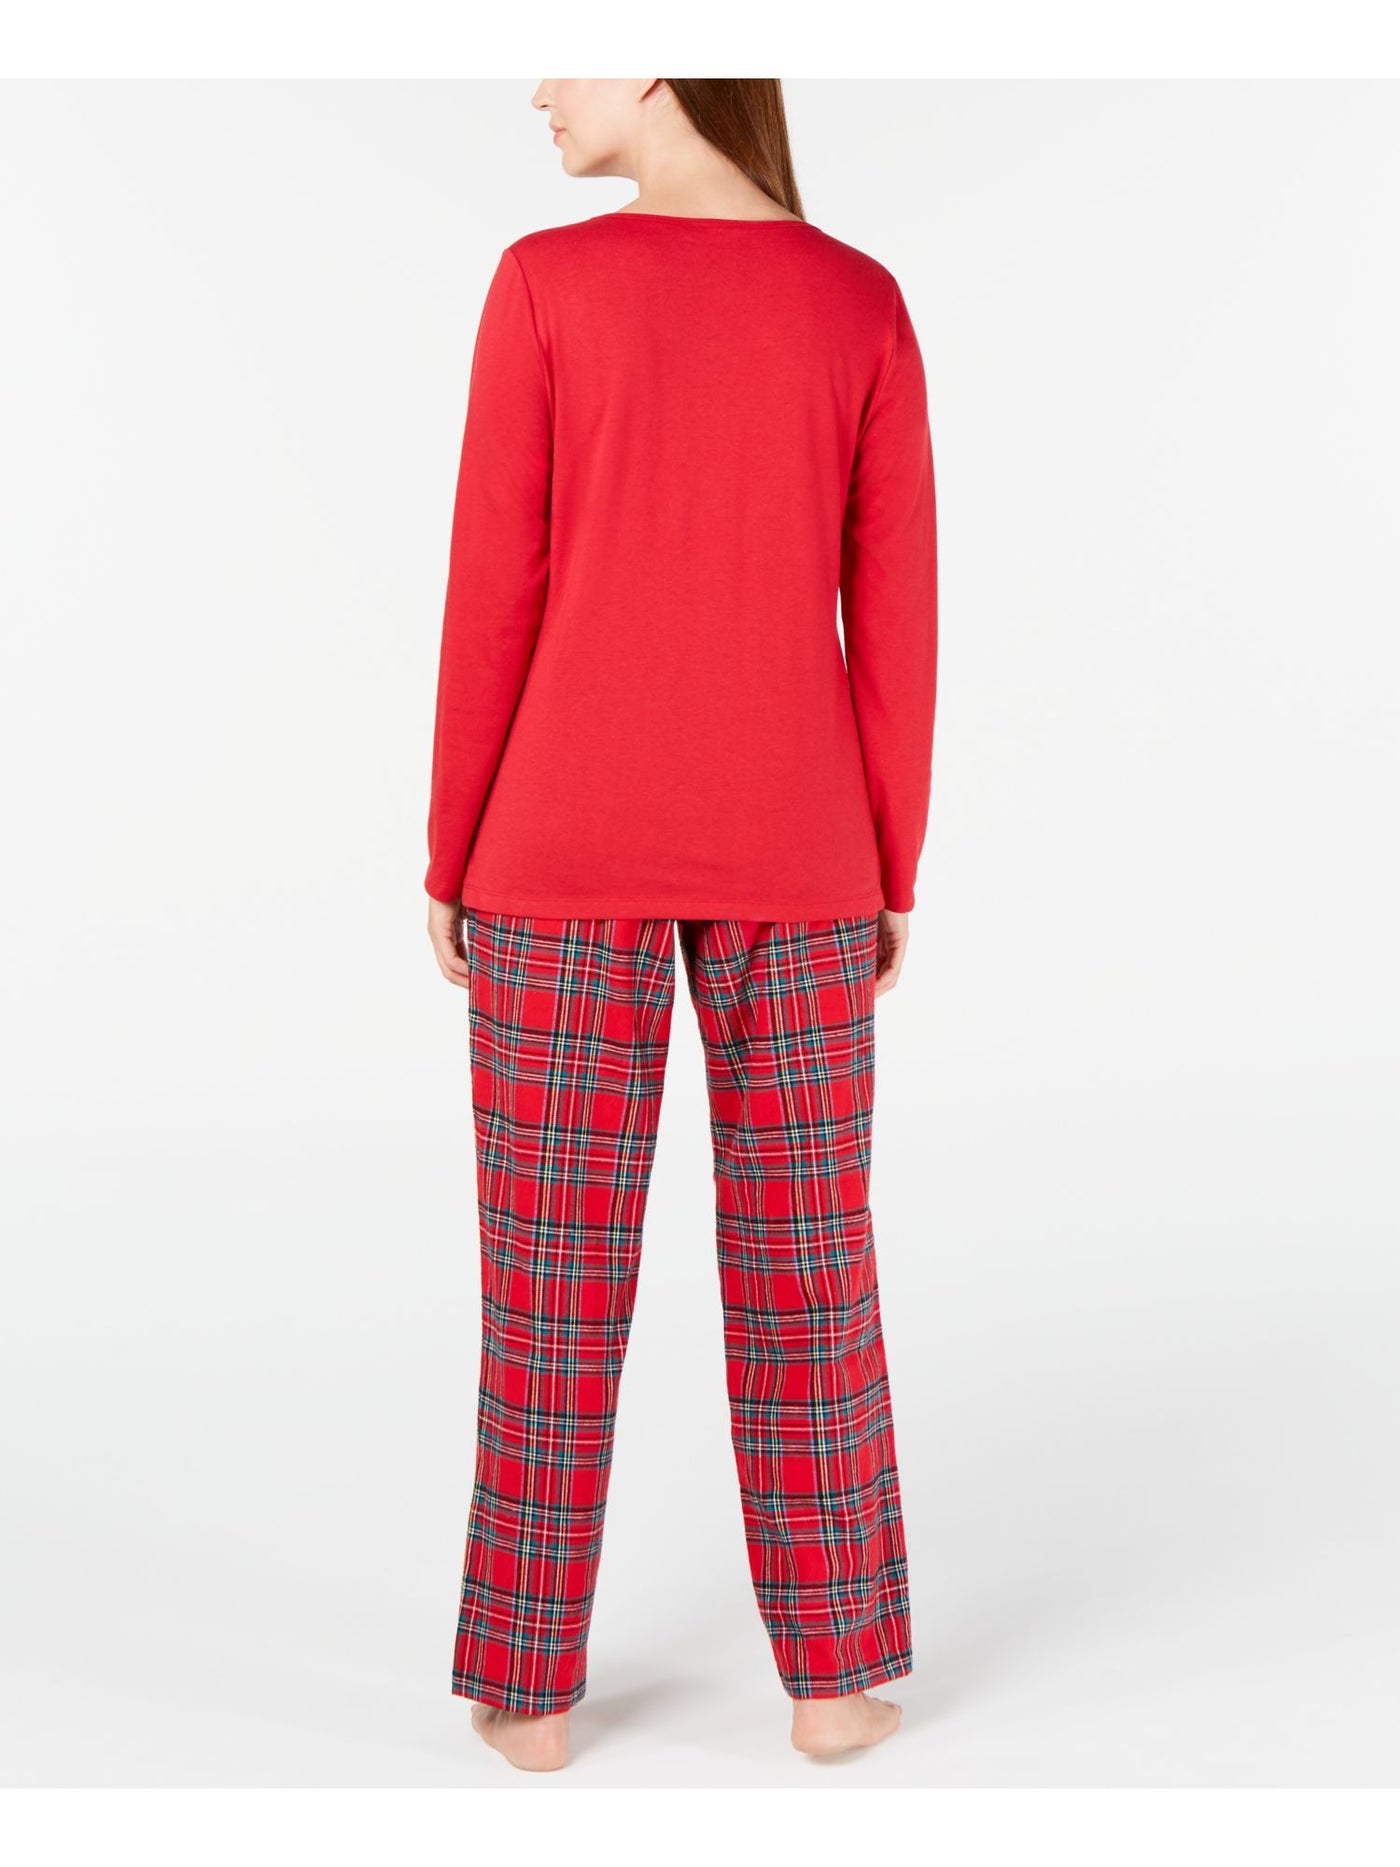 FAMILY PJs Womens Mix It Red Elastic Band Long Sleeve T-Shirt Top Straight leg Pants Knit Pajamas M